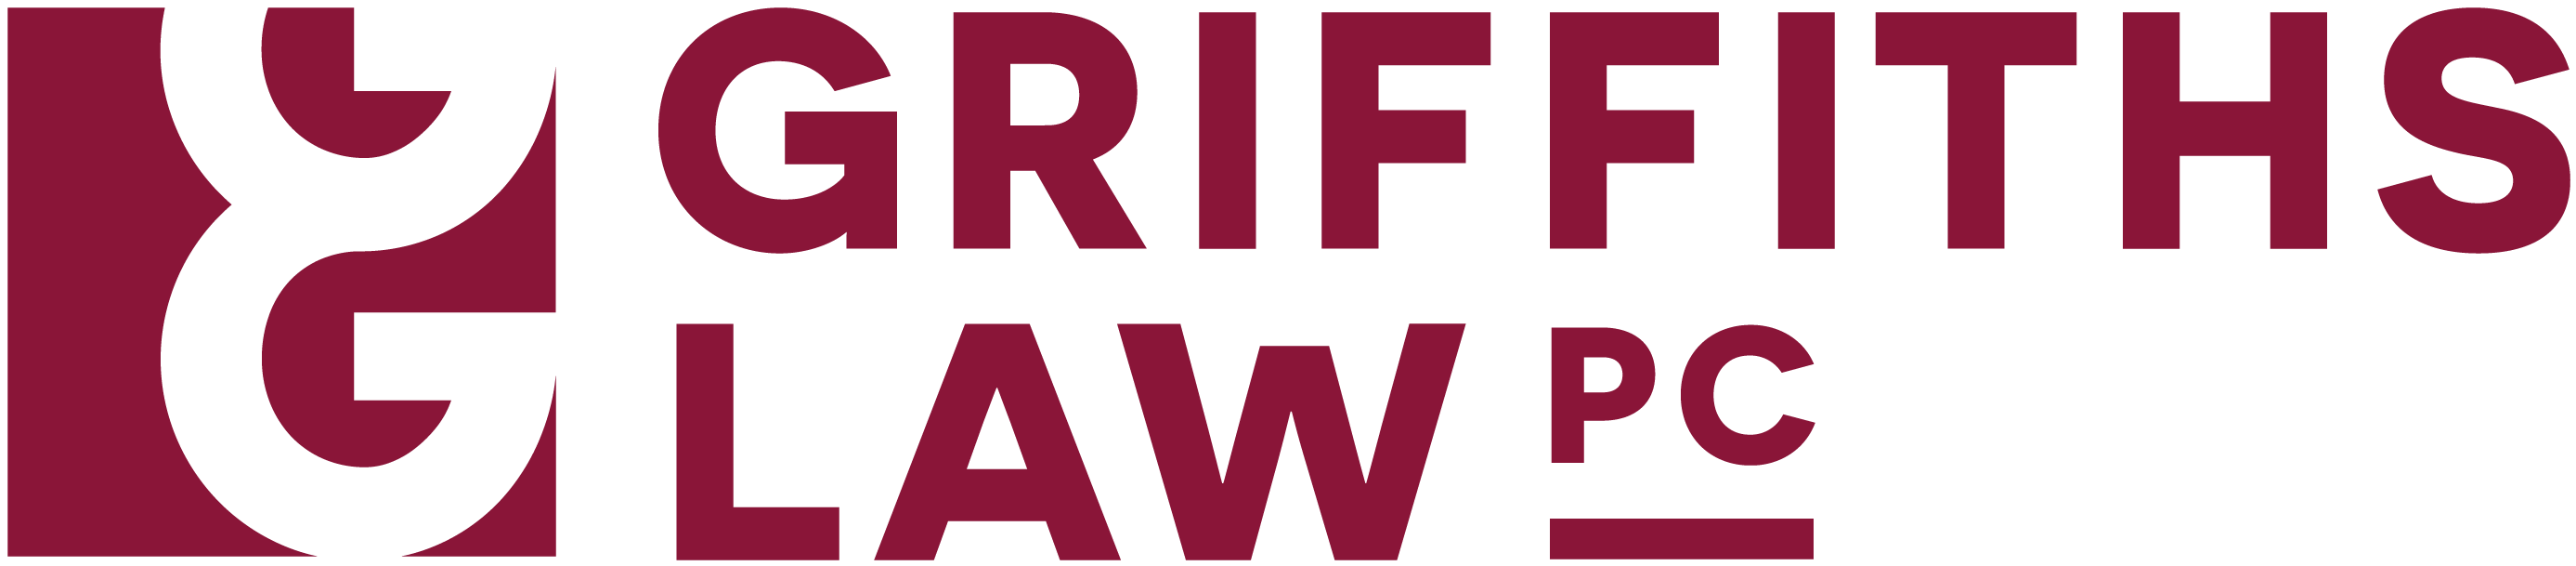 griffiths logo maroon 1